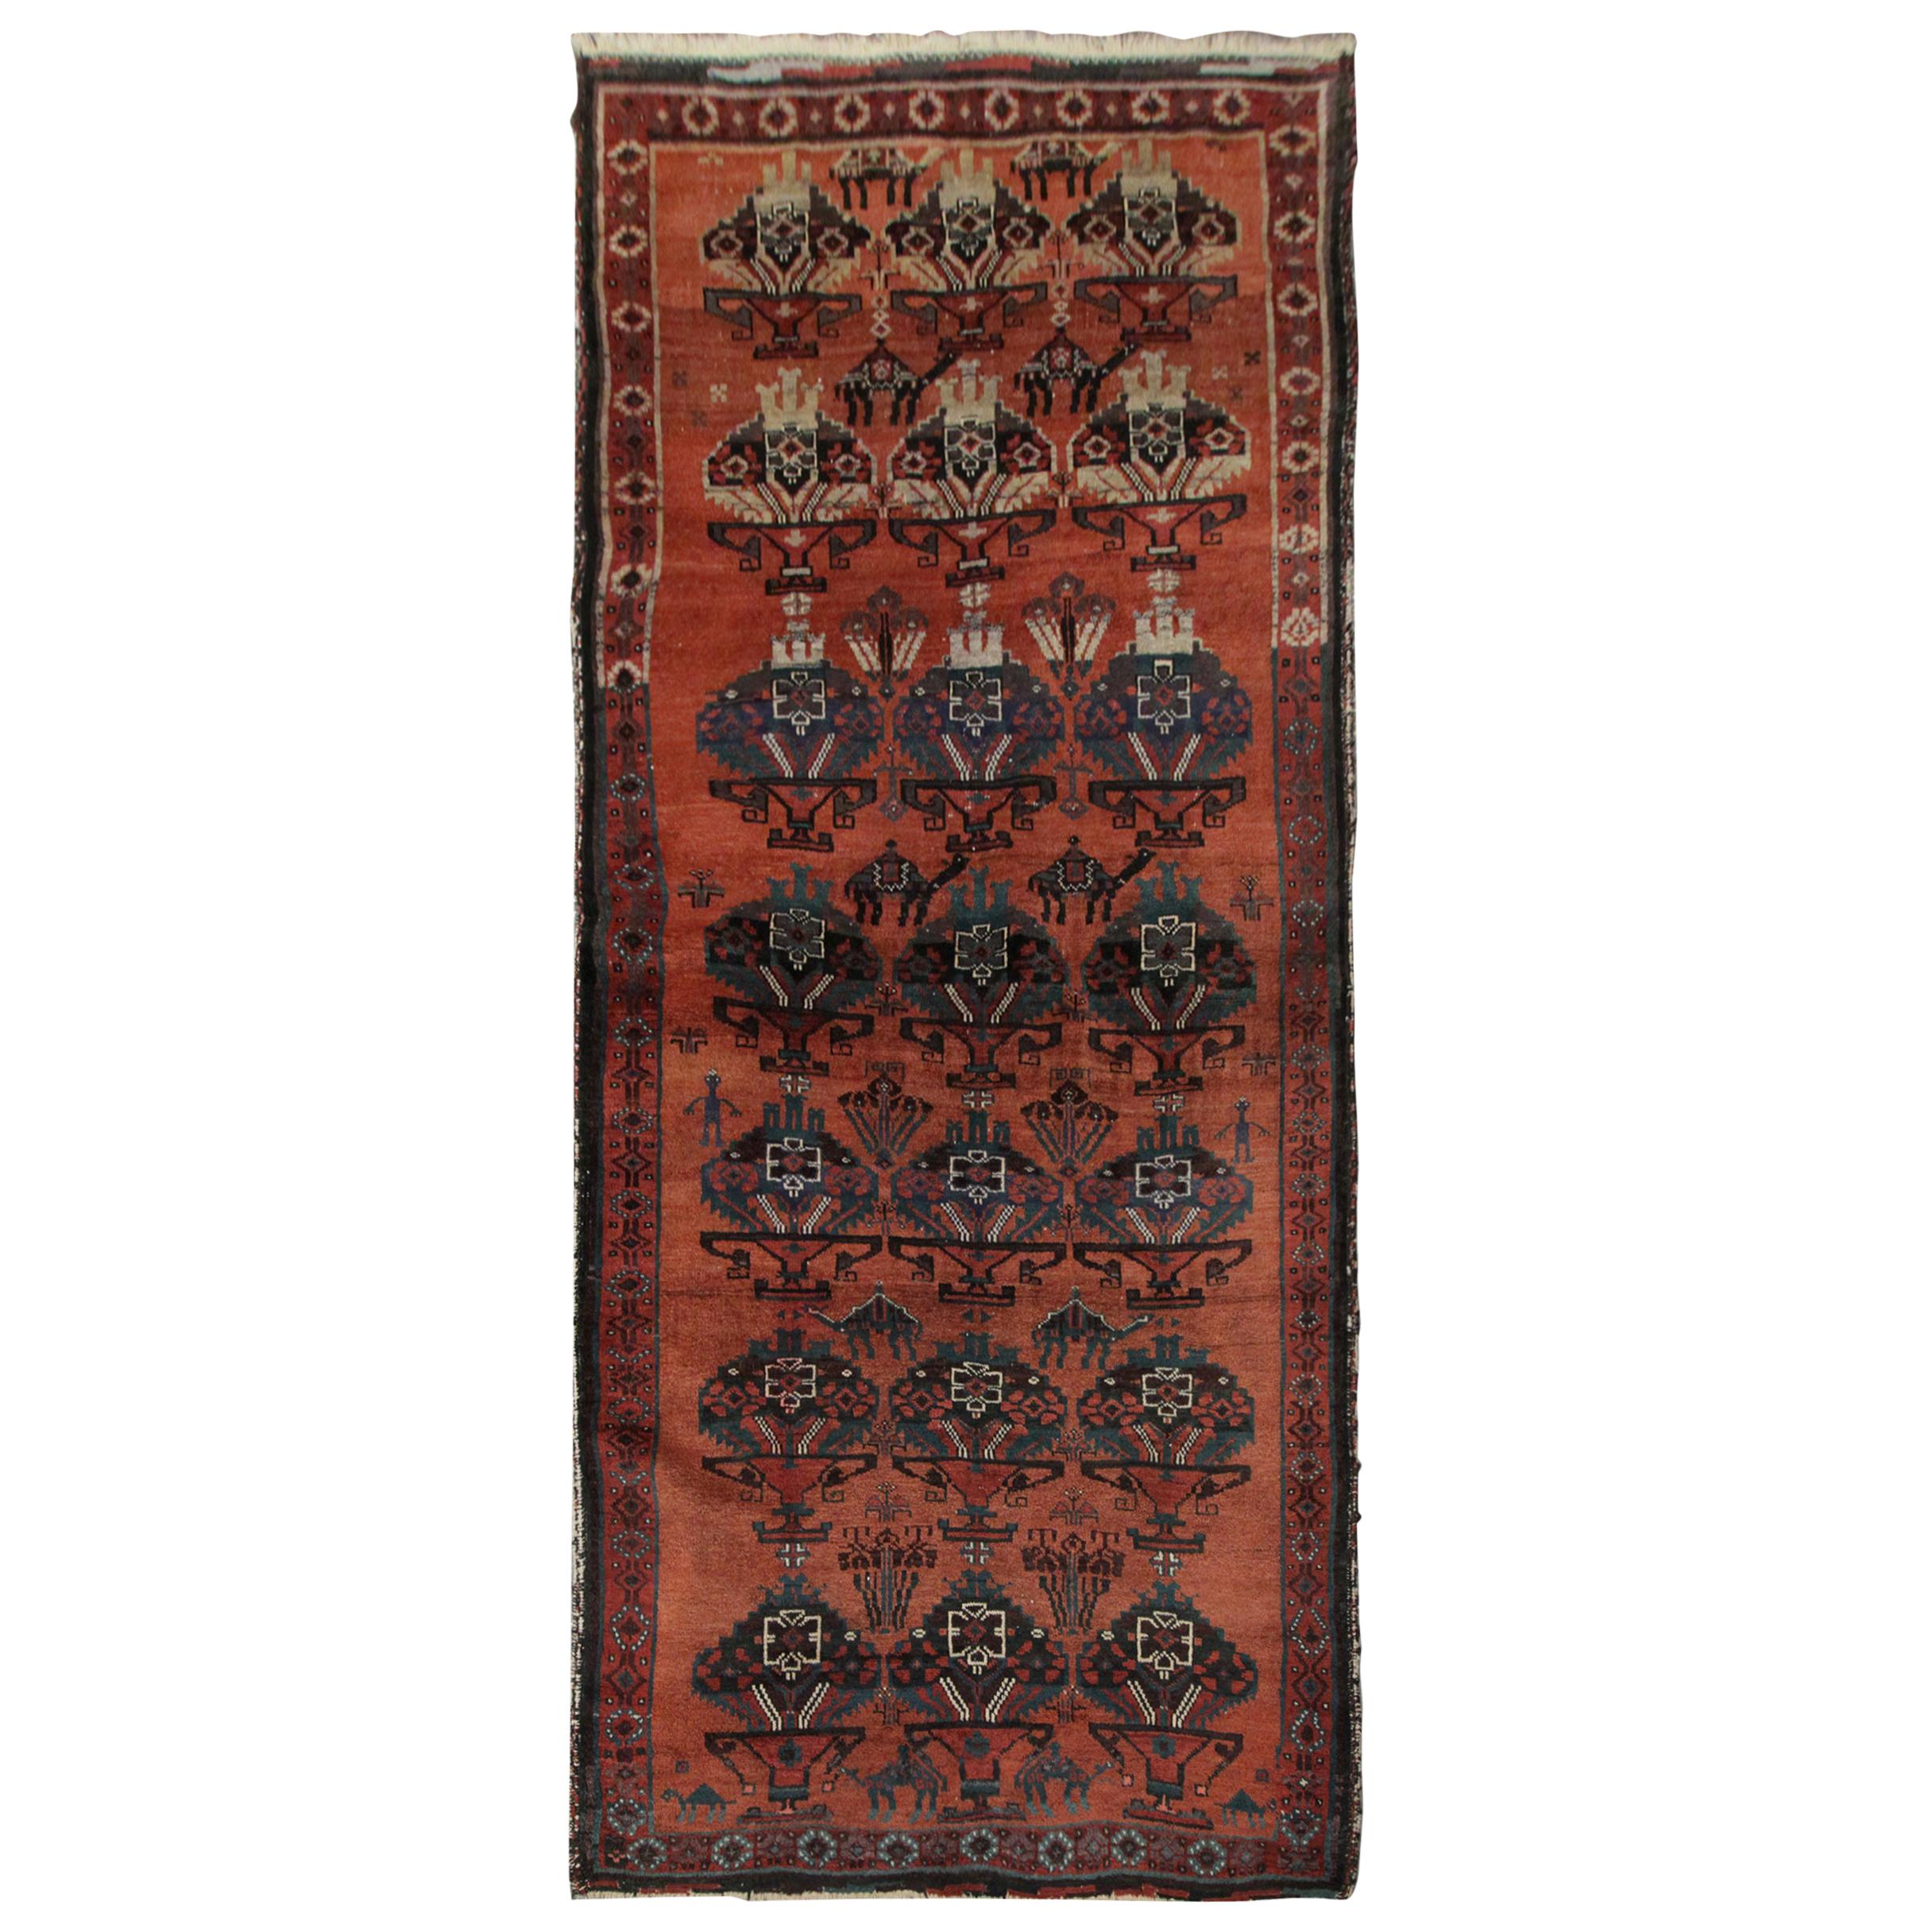 Handmade Antique Tribal Living Room Rug, Traditional Red Wool Carpet Rug